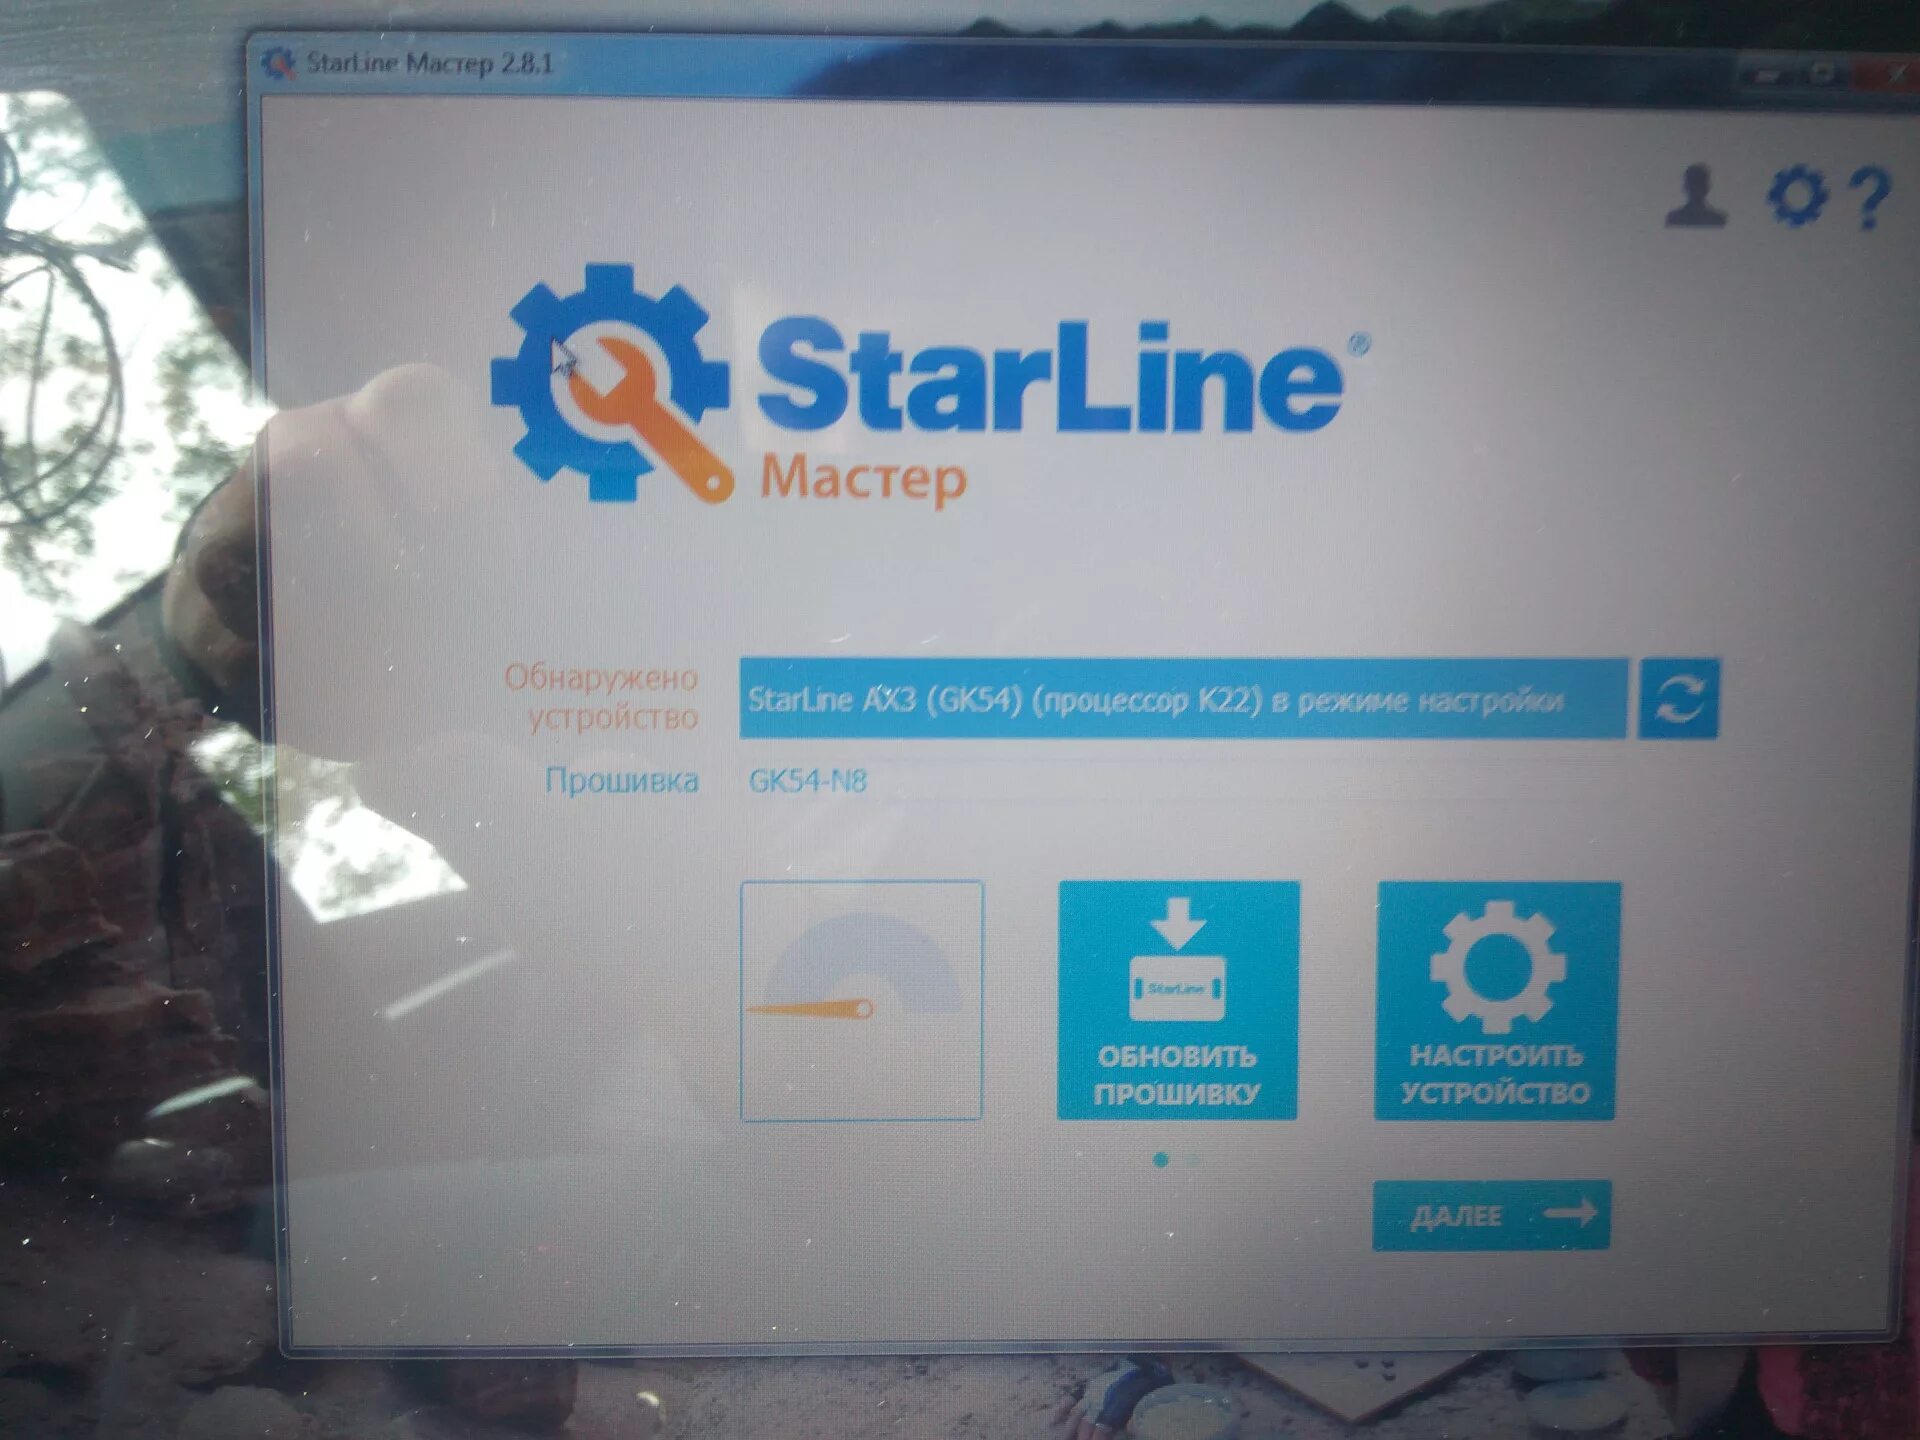 Starline обновление gsm. Программатор STARLINE a93. GSM модуль STARLINE a93. STARLINE Master телематика. STARLINE Прошивка.